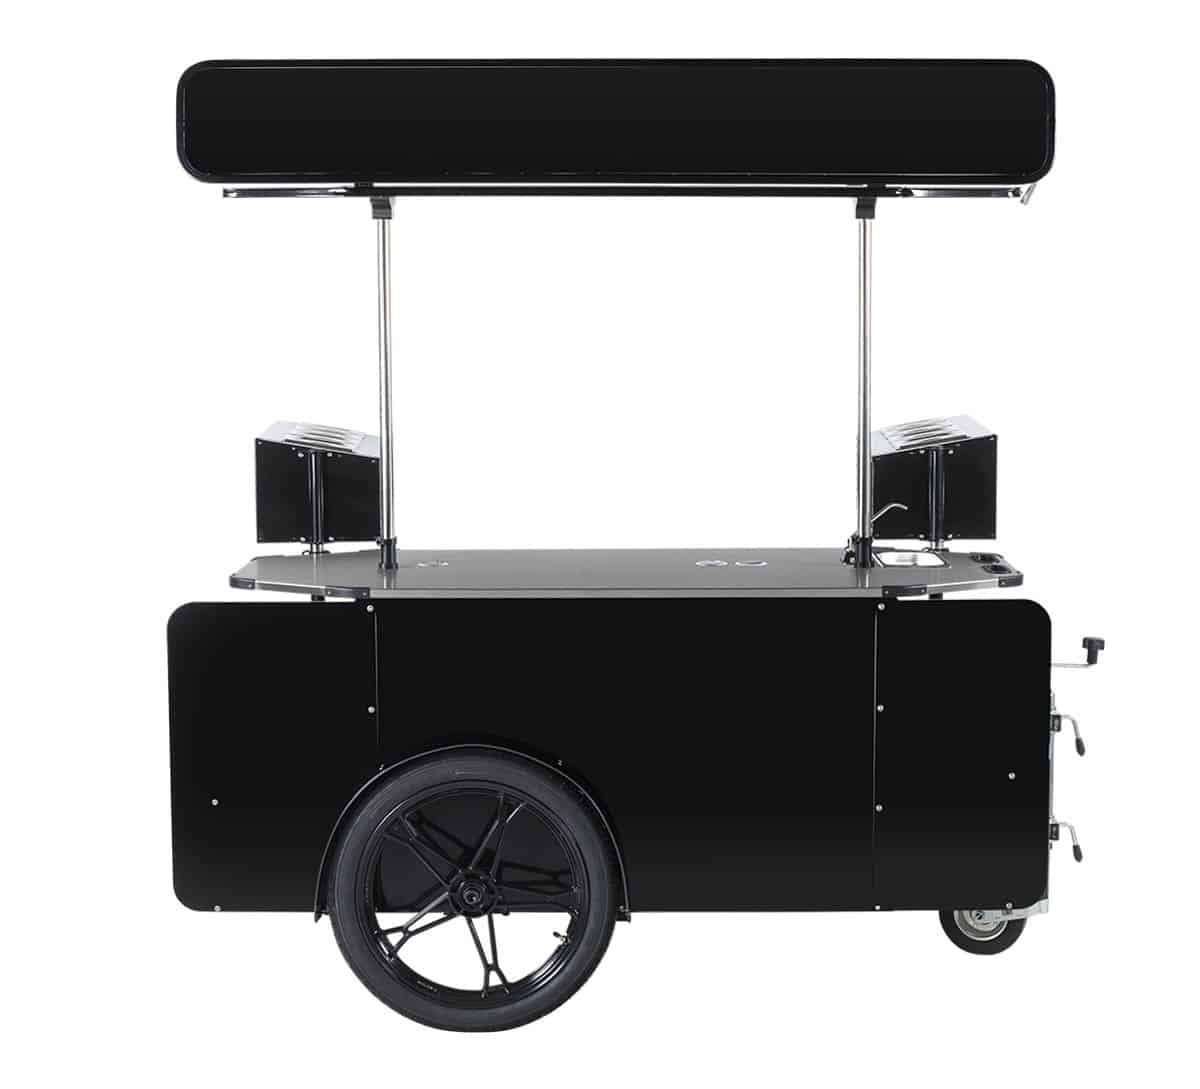 Basic street food cart by Bizz On Wheels